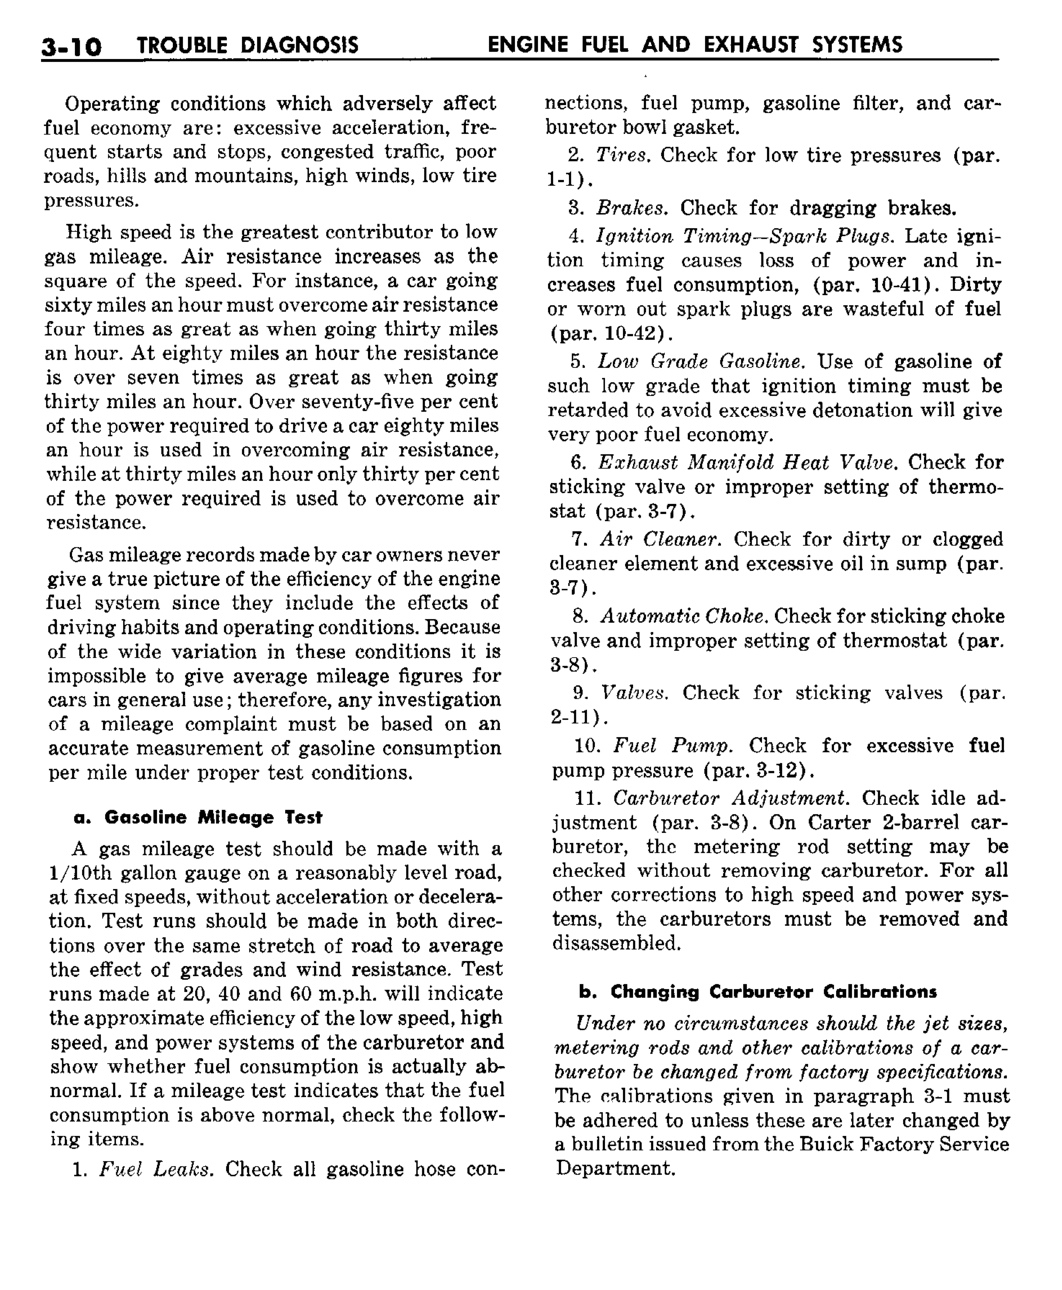 n_04 1960 Buick Shop Manual - Engine Fuel & Exhaust-010-010.jpg